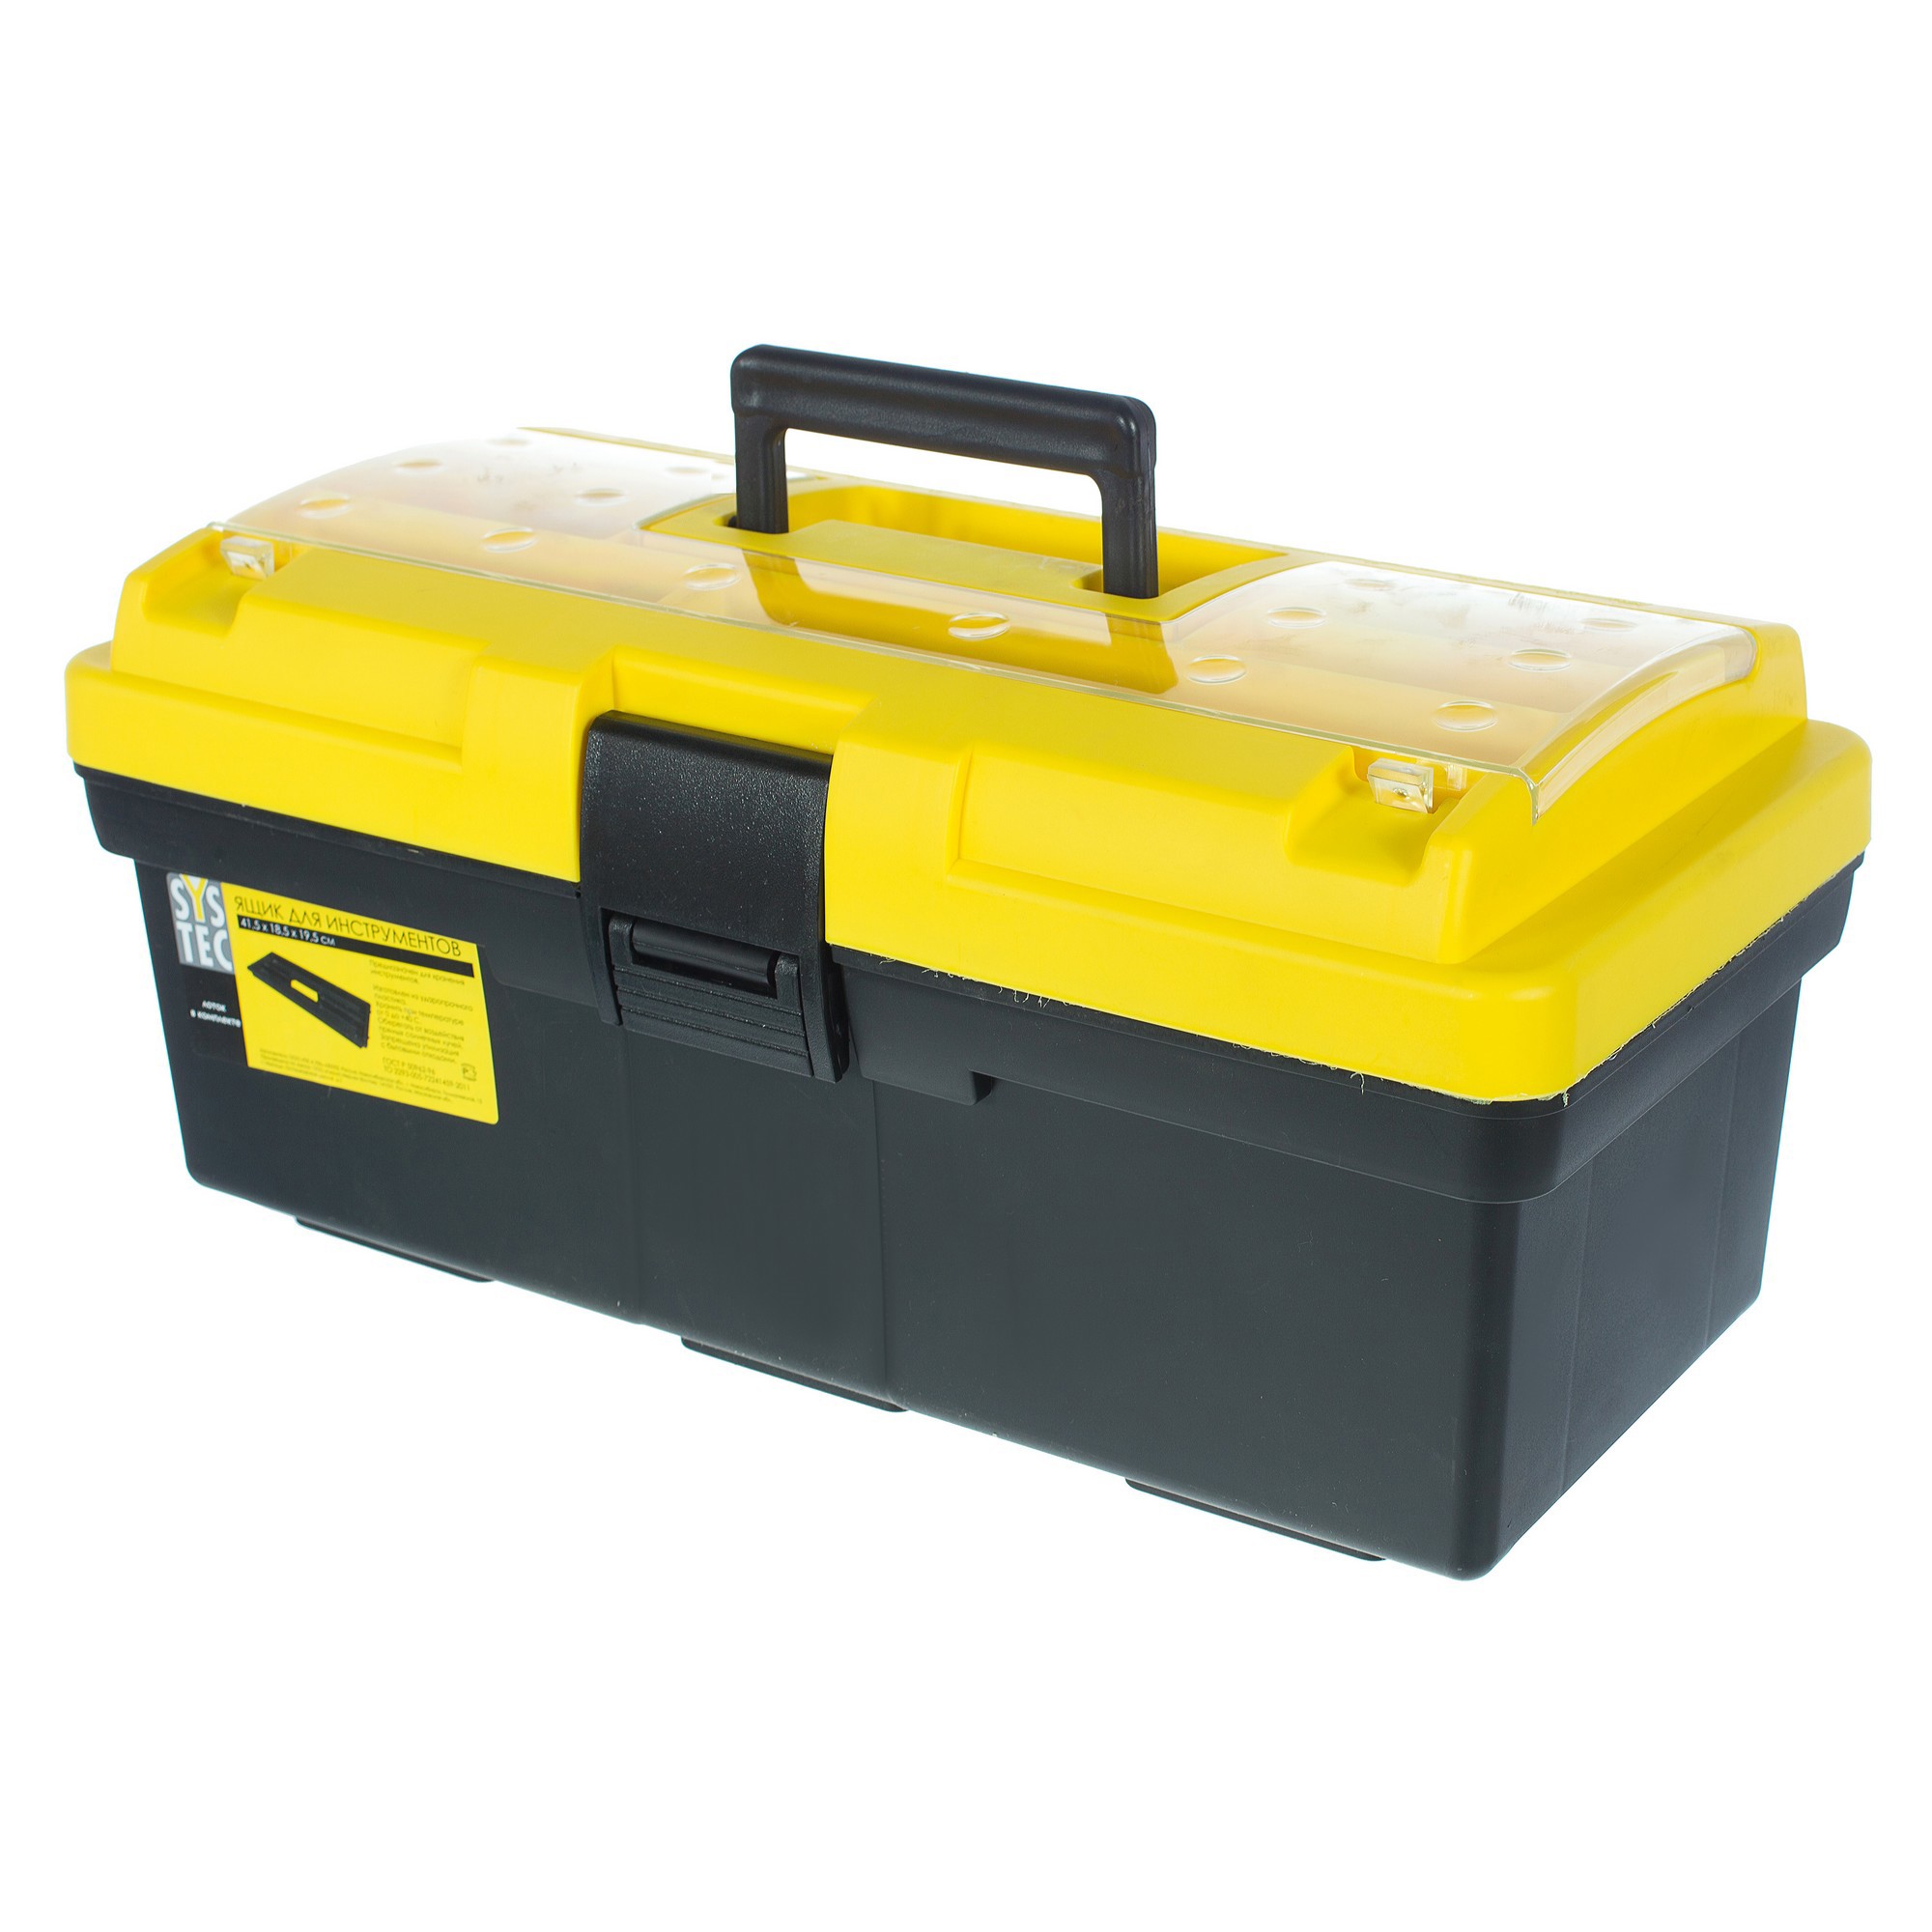 12829174 Ящик для инструмента 195х185х415 мм, пластик, цвет черно-жёлтый STLM-0002437 SYSTEC